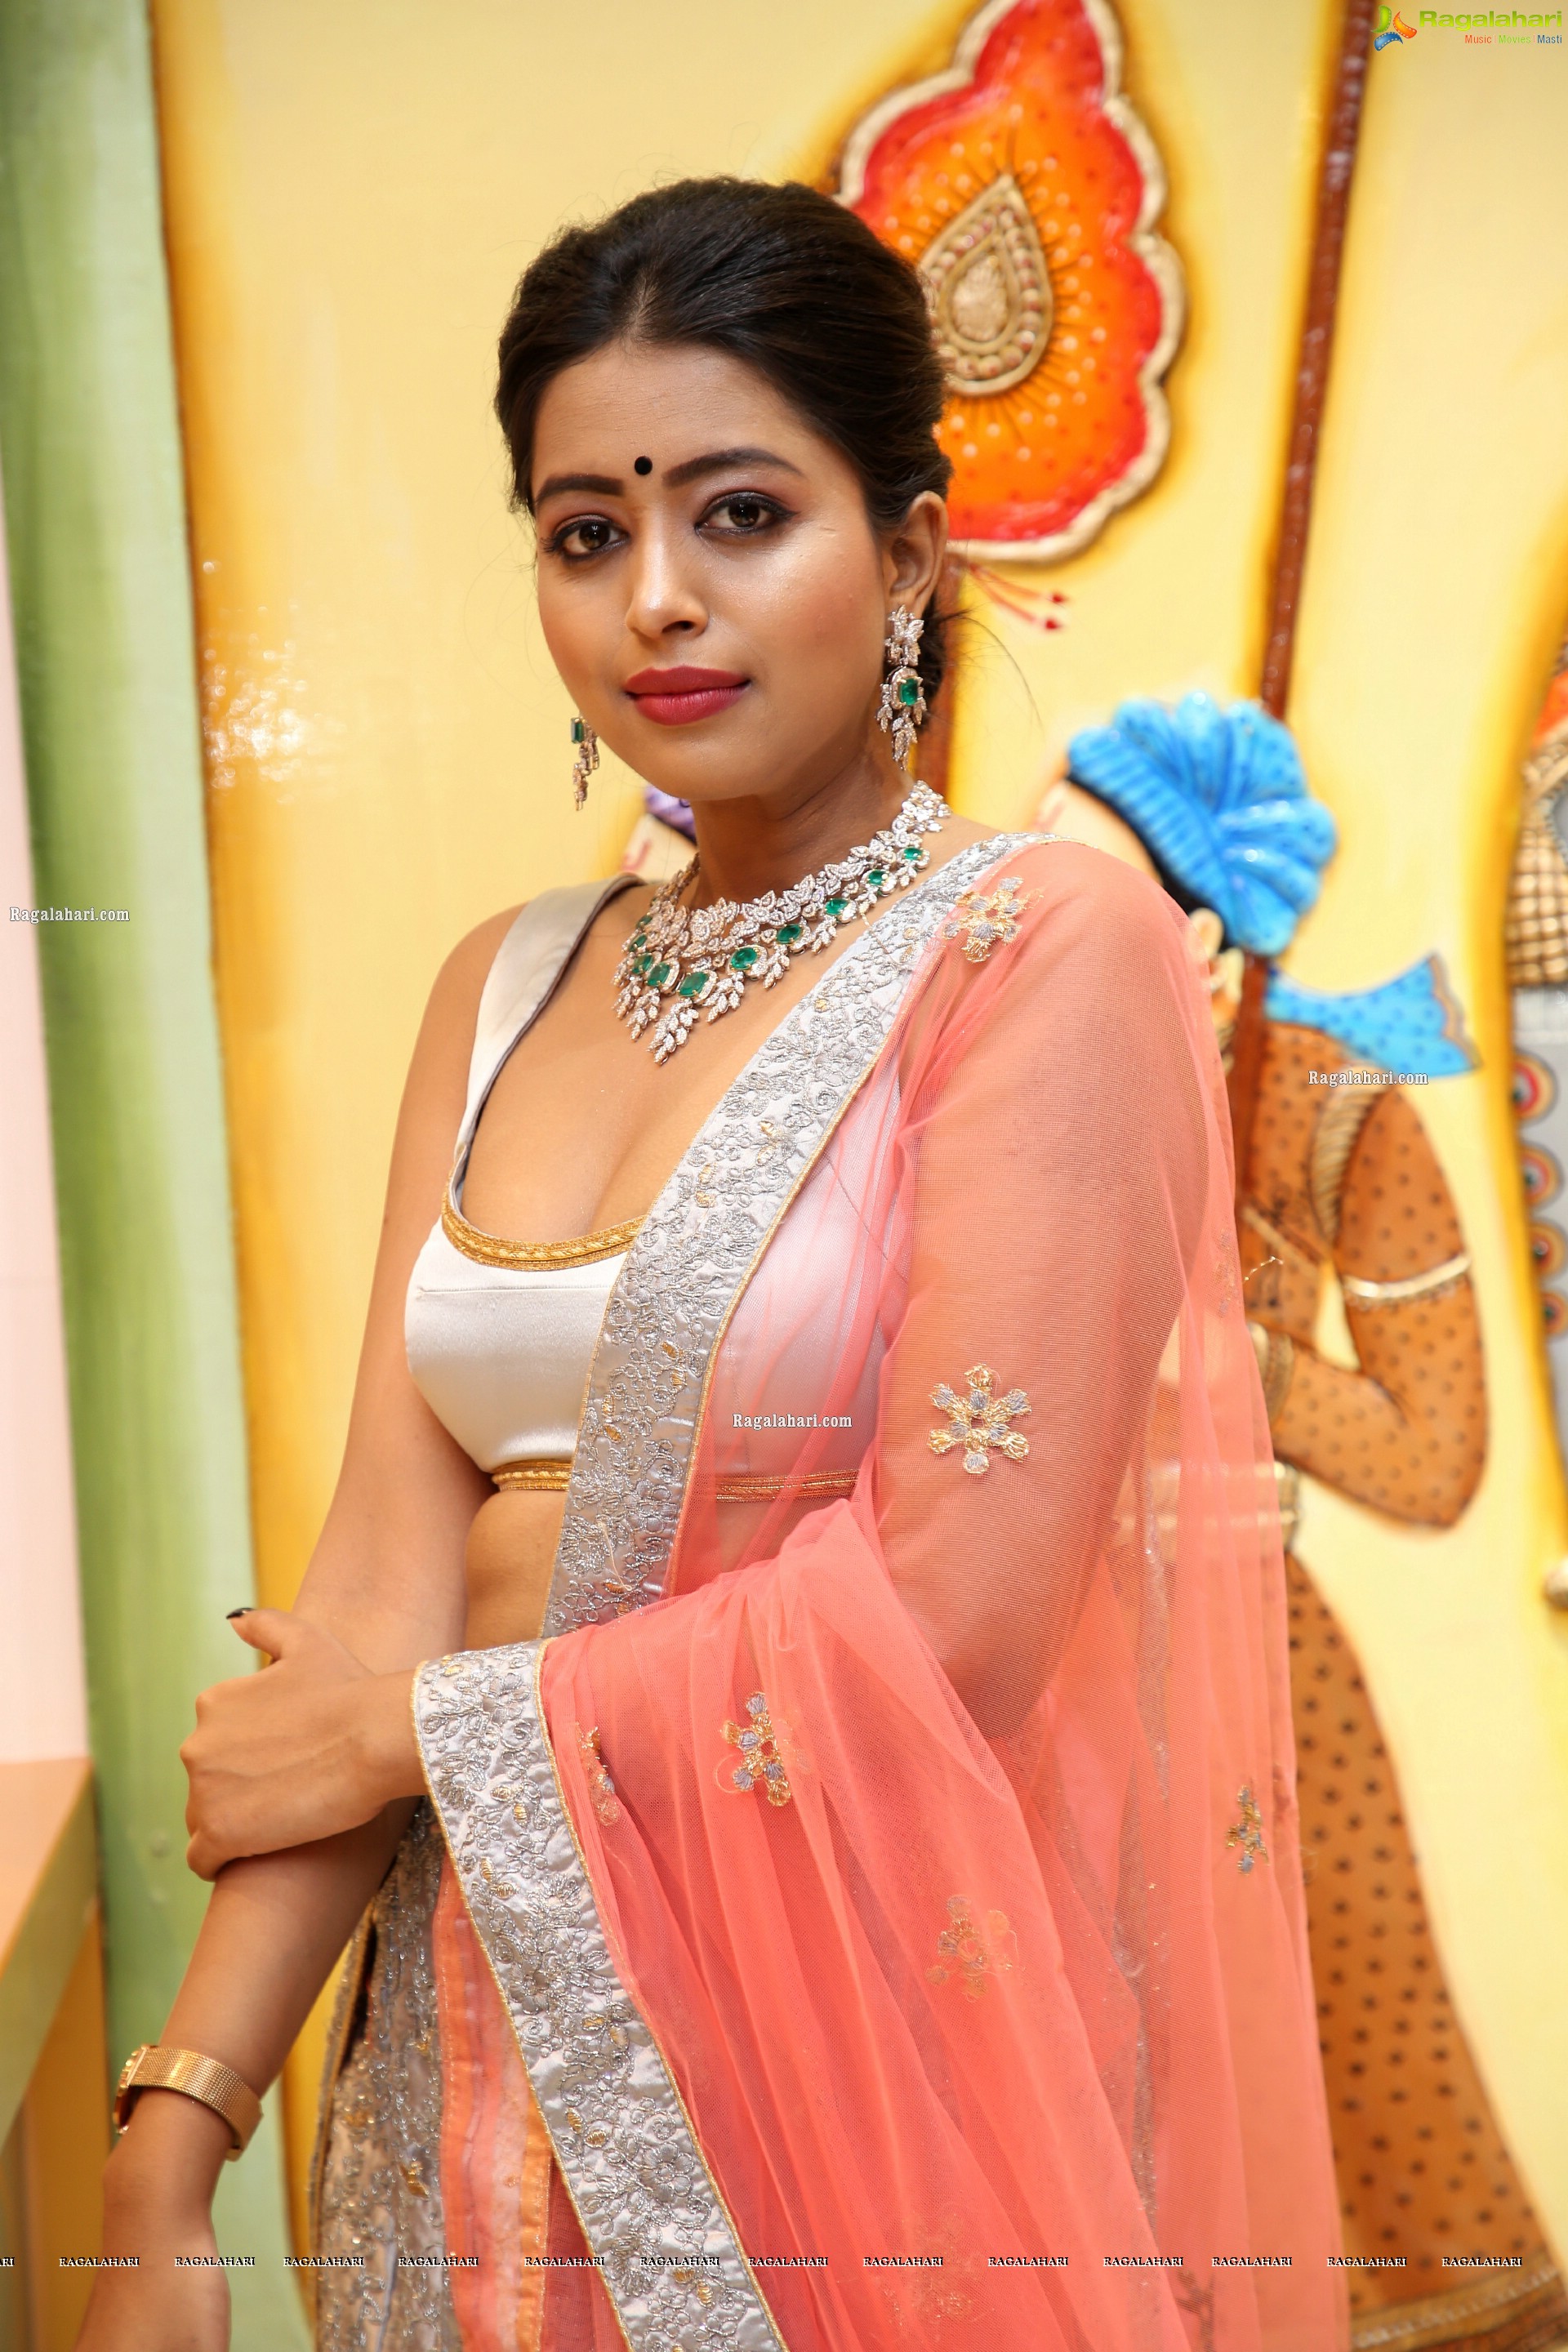 Rittika Chakraborty Poses With Gold Jewellery, HD Photo Gallery